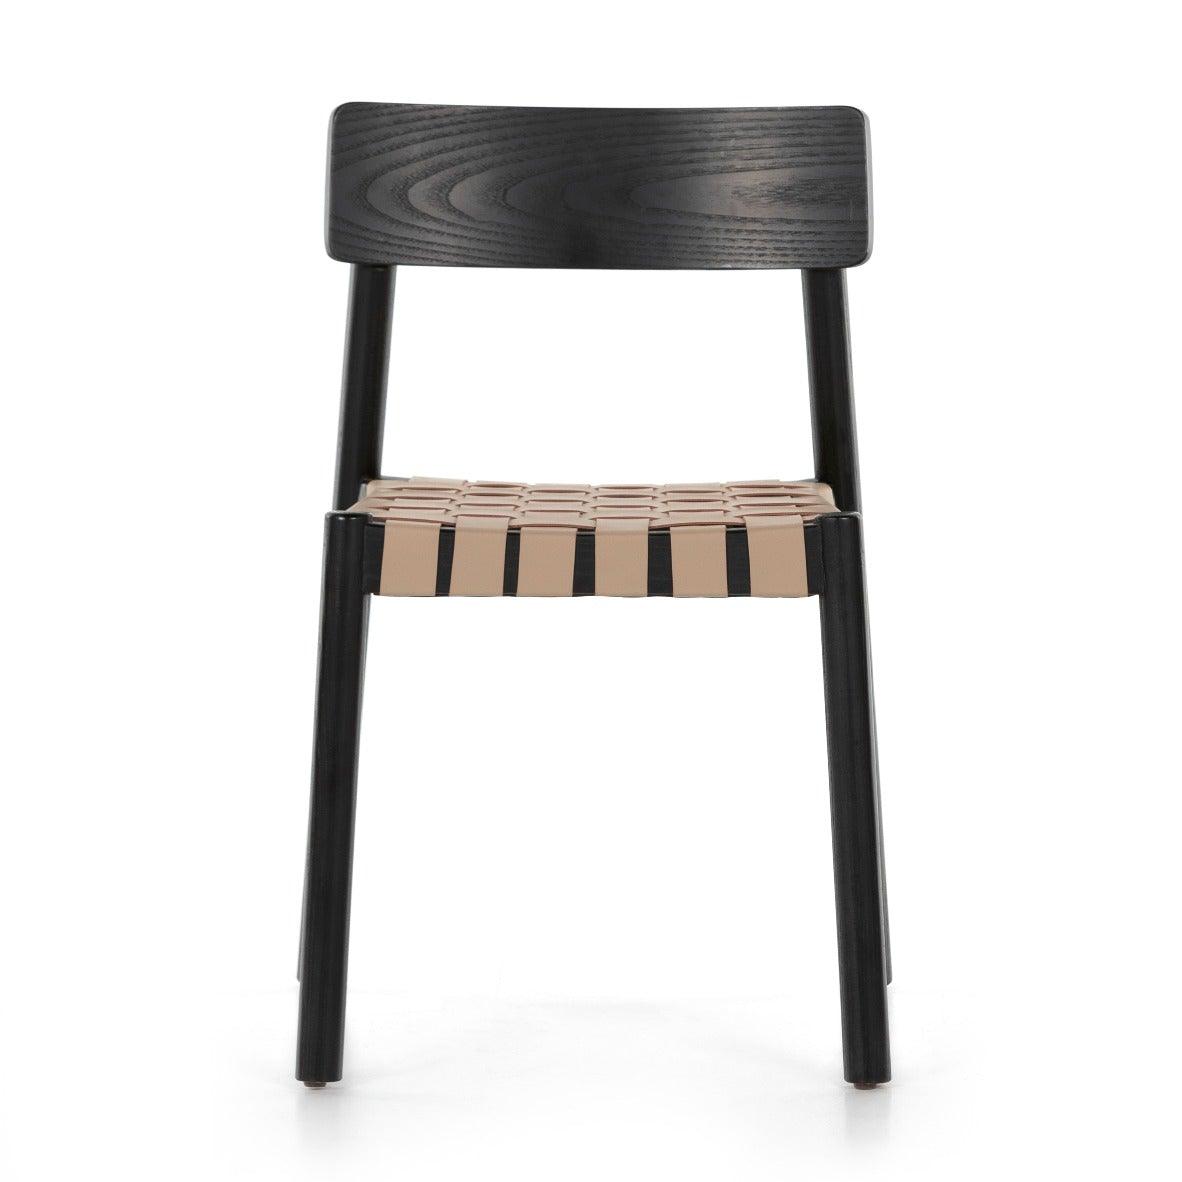 HEISLER DINING CHAIR - Reimagine Designs - Dining Chair, new